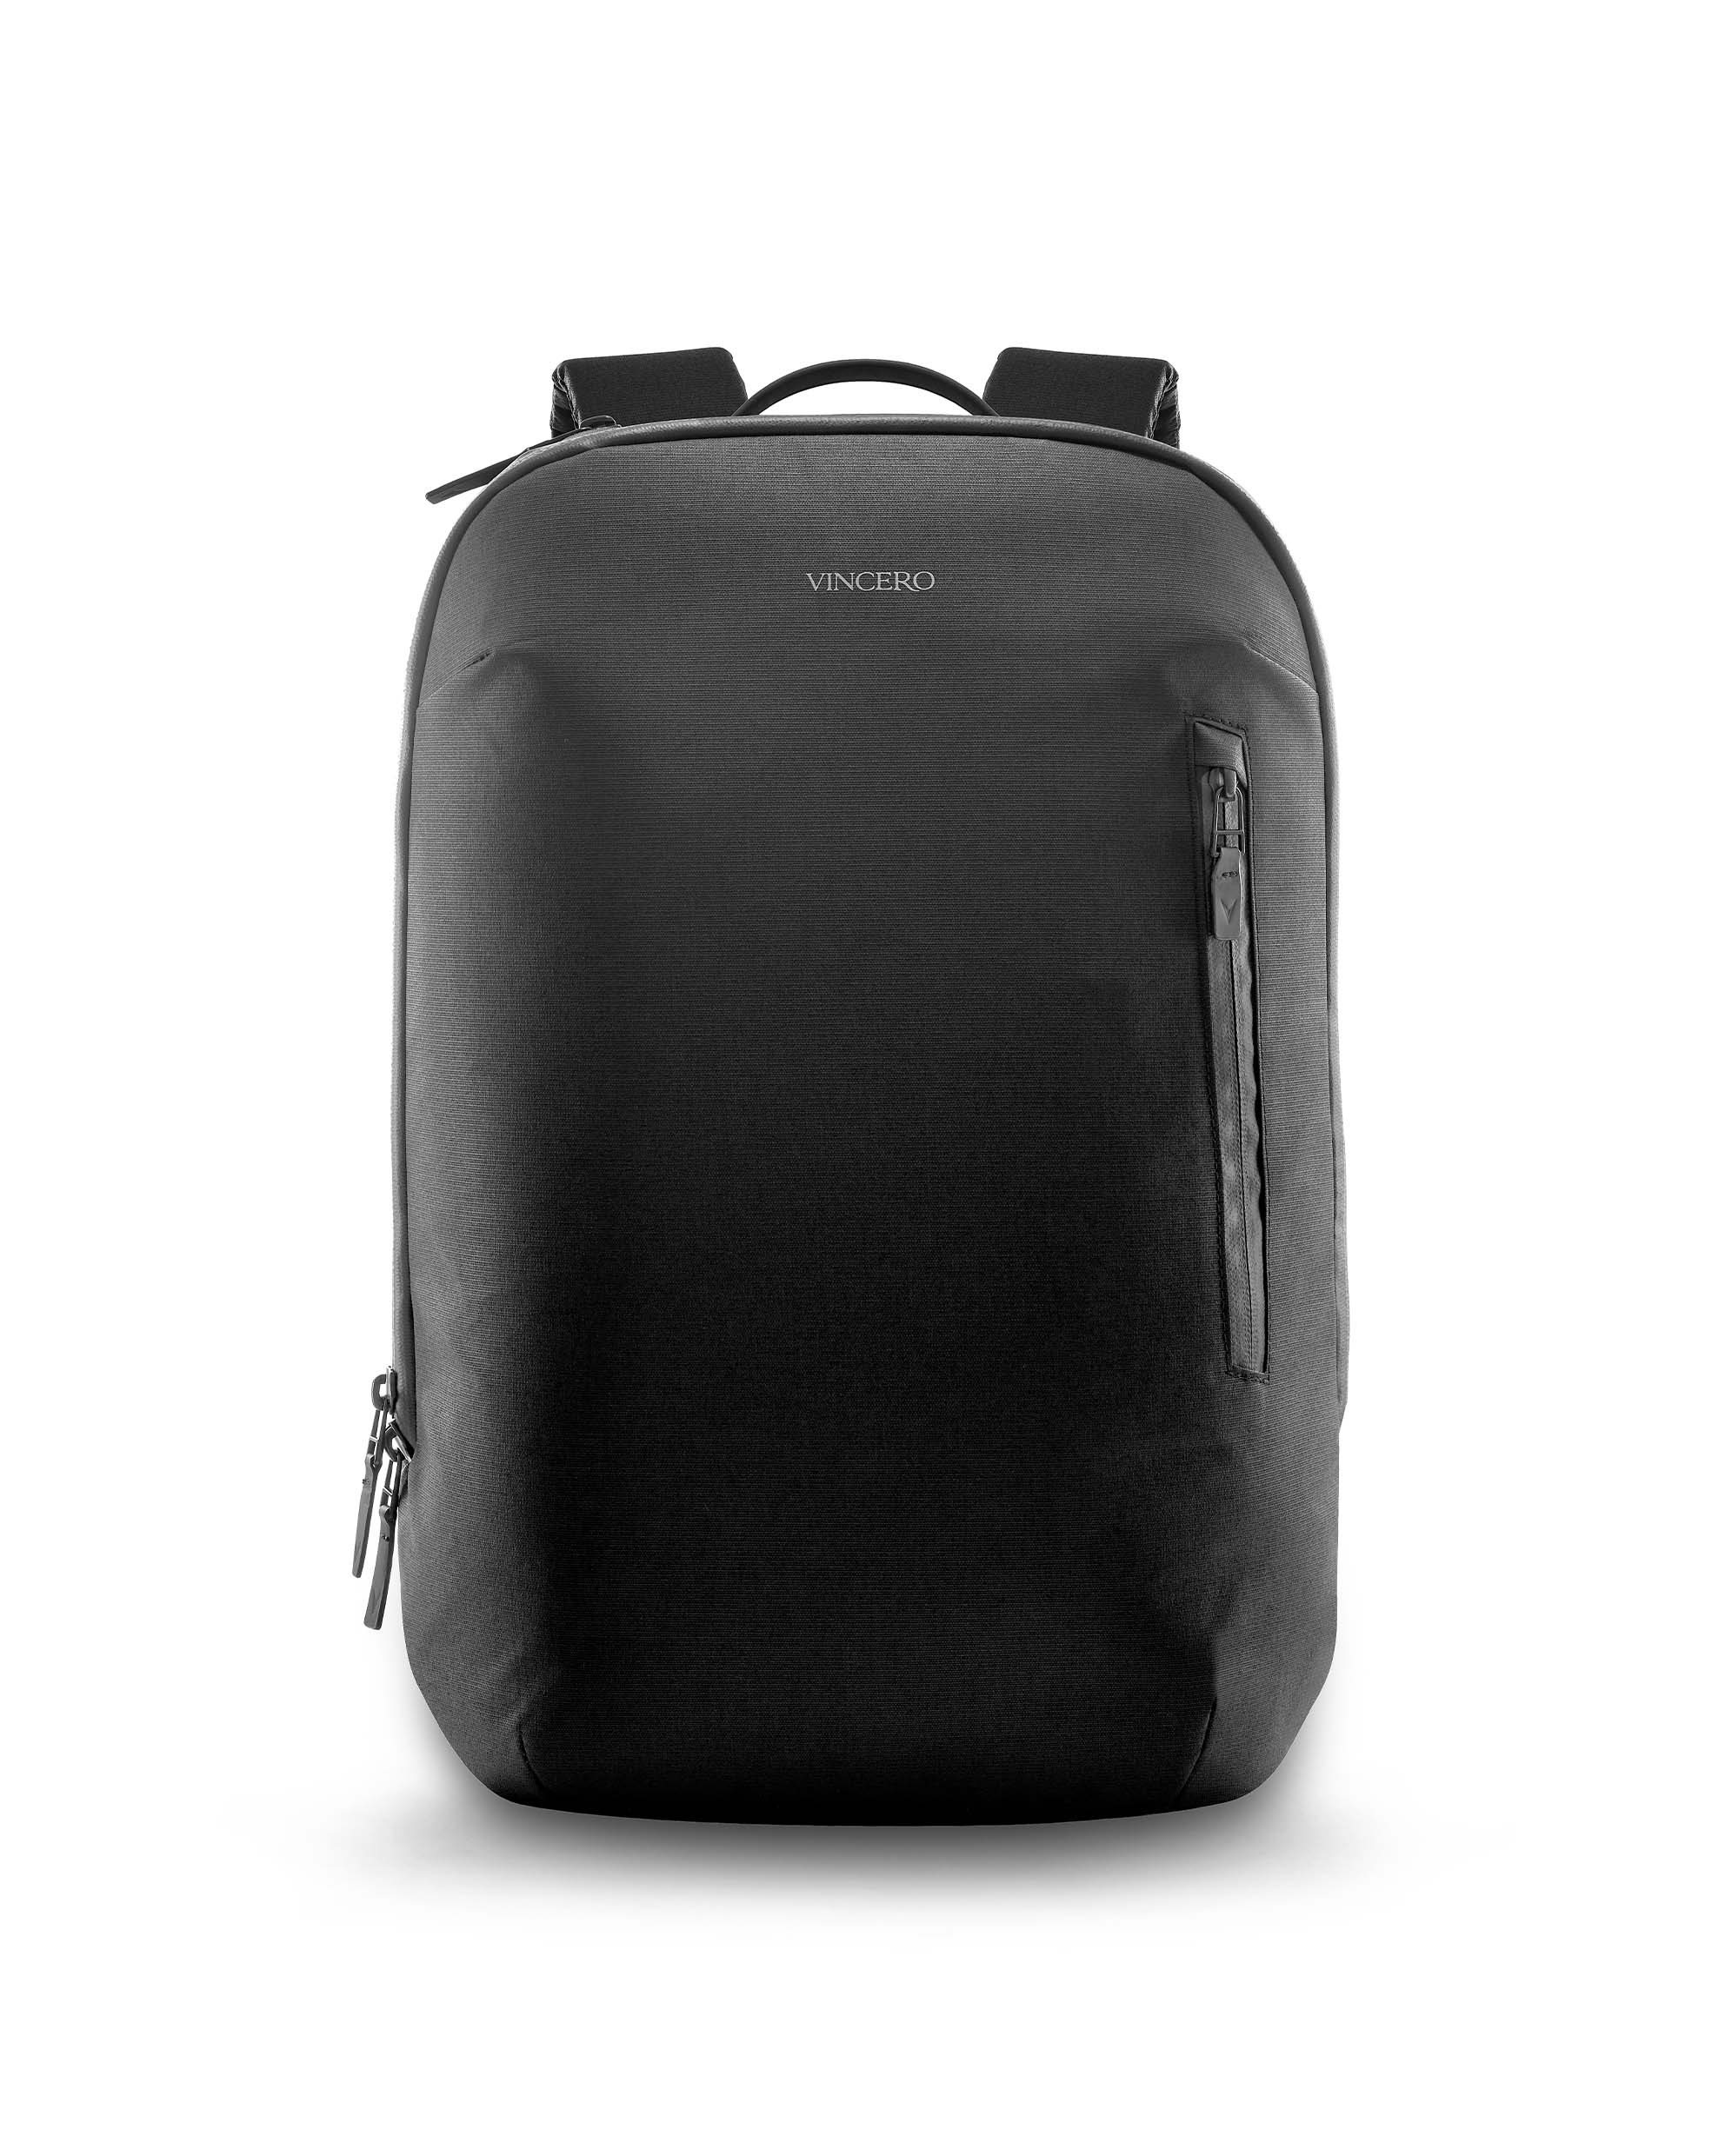 Gorgeous Vegan Handbags and Backpacks (Updated Feb. 2019)